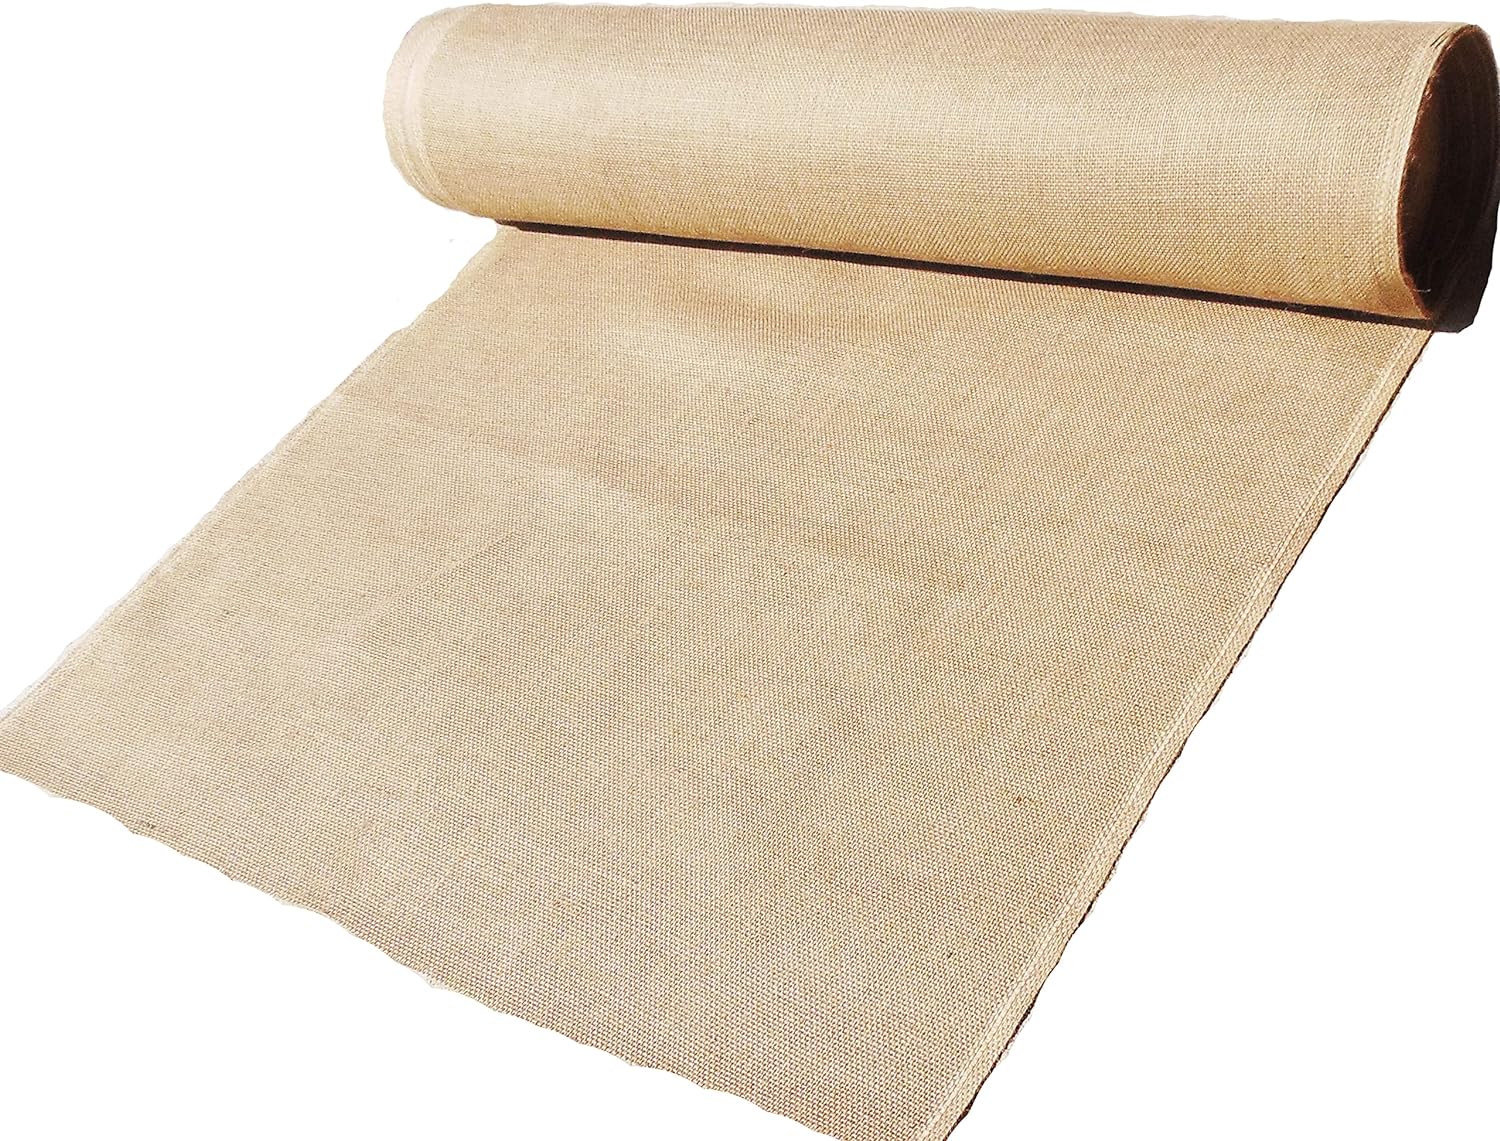 Burlap Fabric Roll | Jute Burlap Fabric | Burlap Rolls for Craft and Gardening | Winter Cover